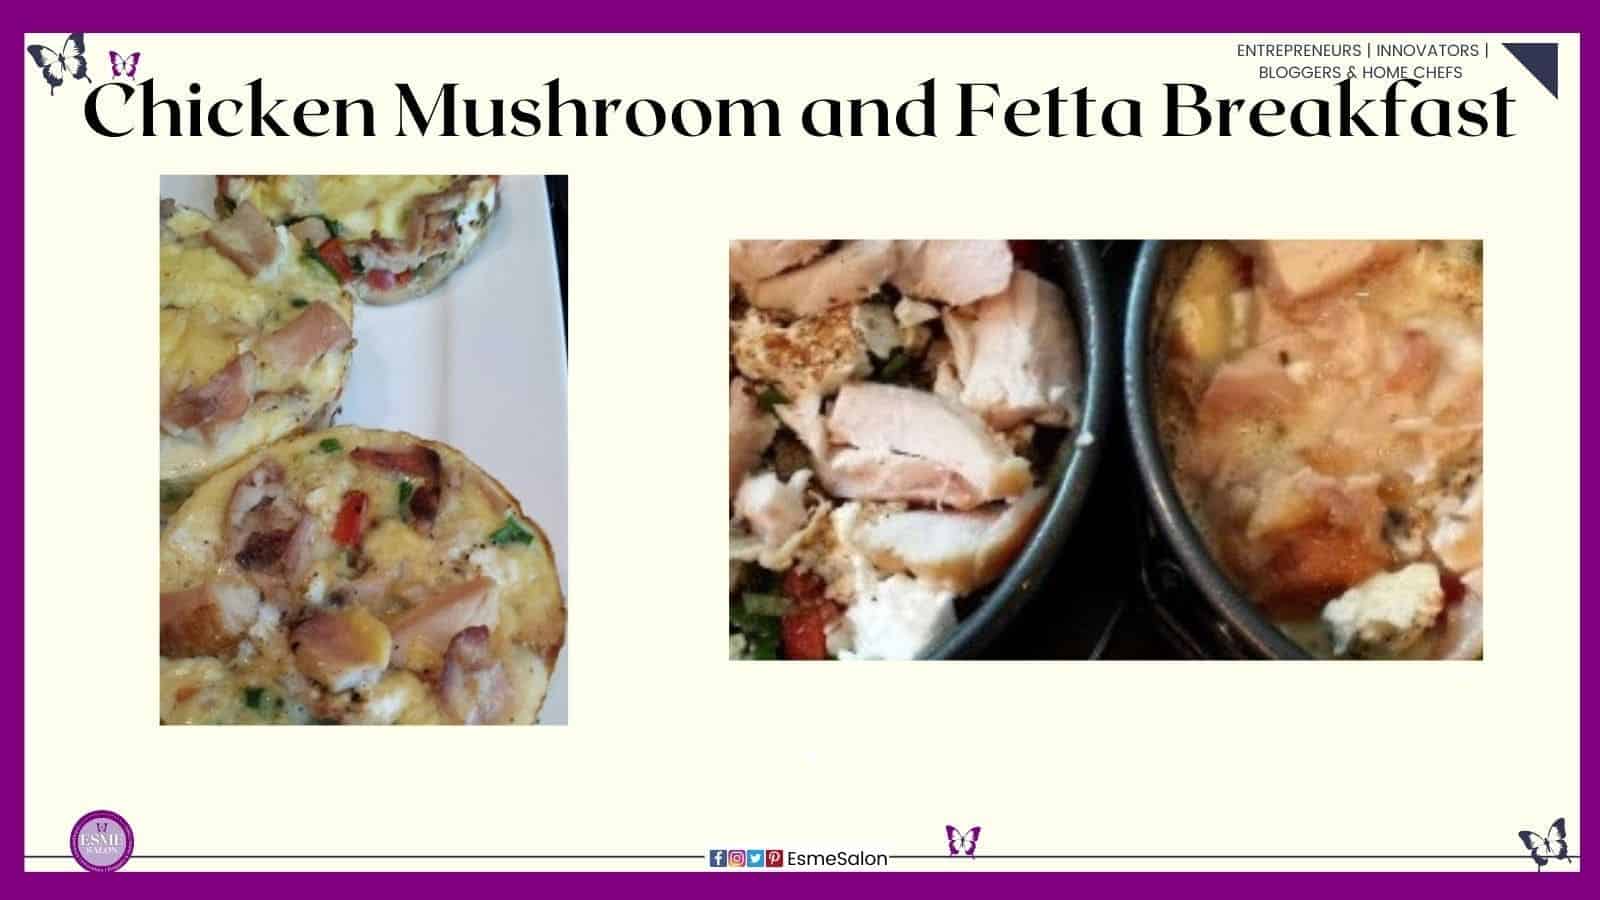 an image of single servings Chicken Mushroom and Fetta Breakfast tarts